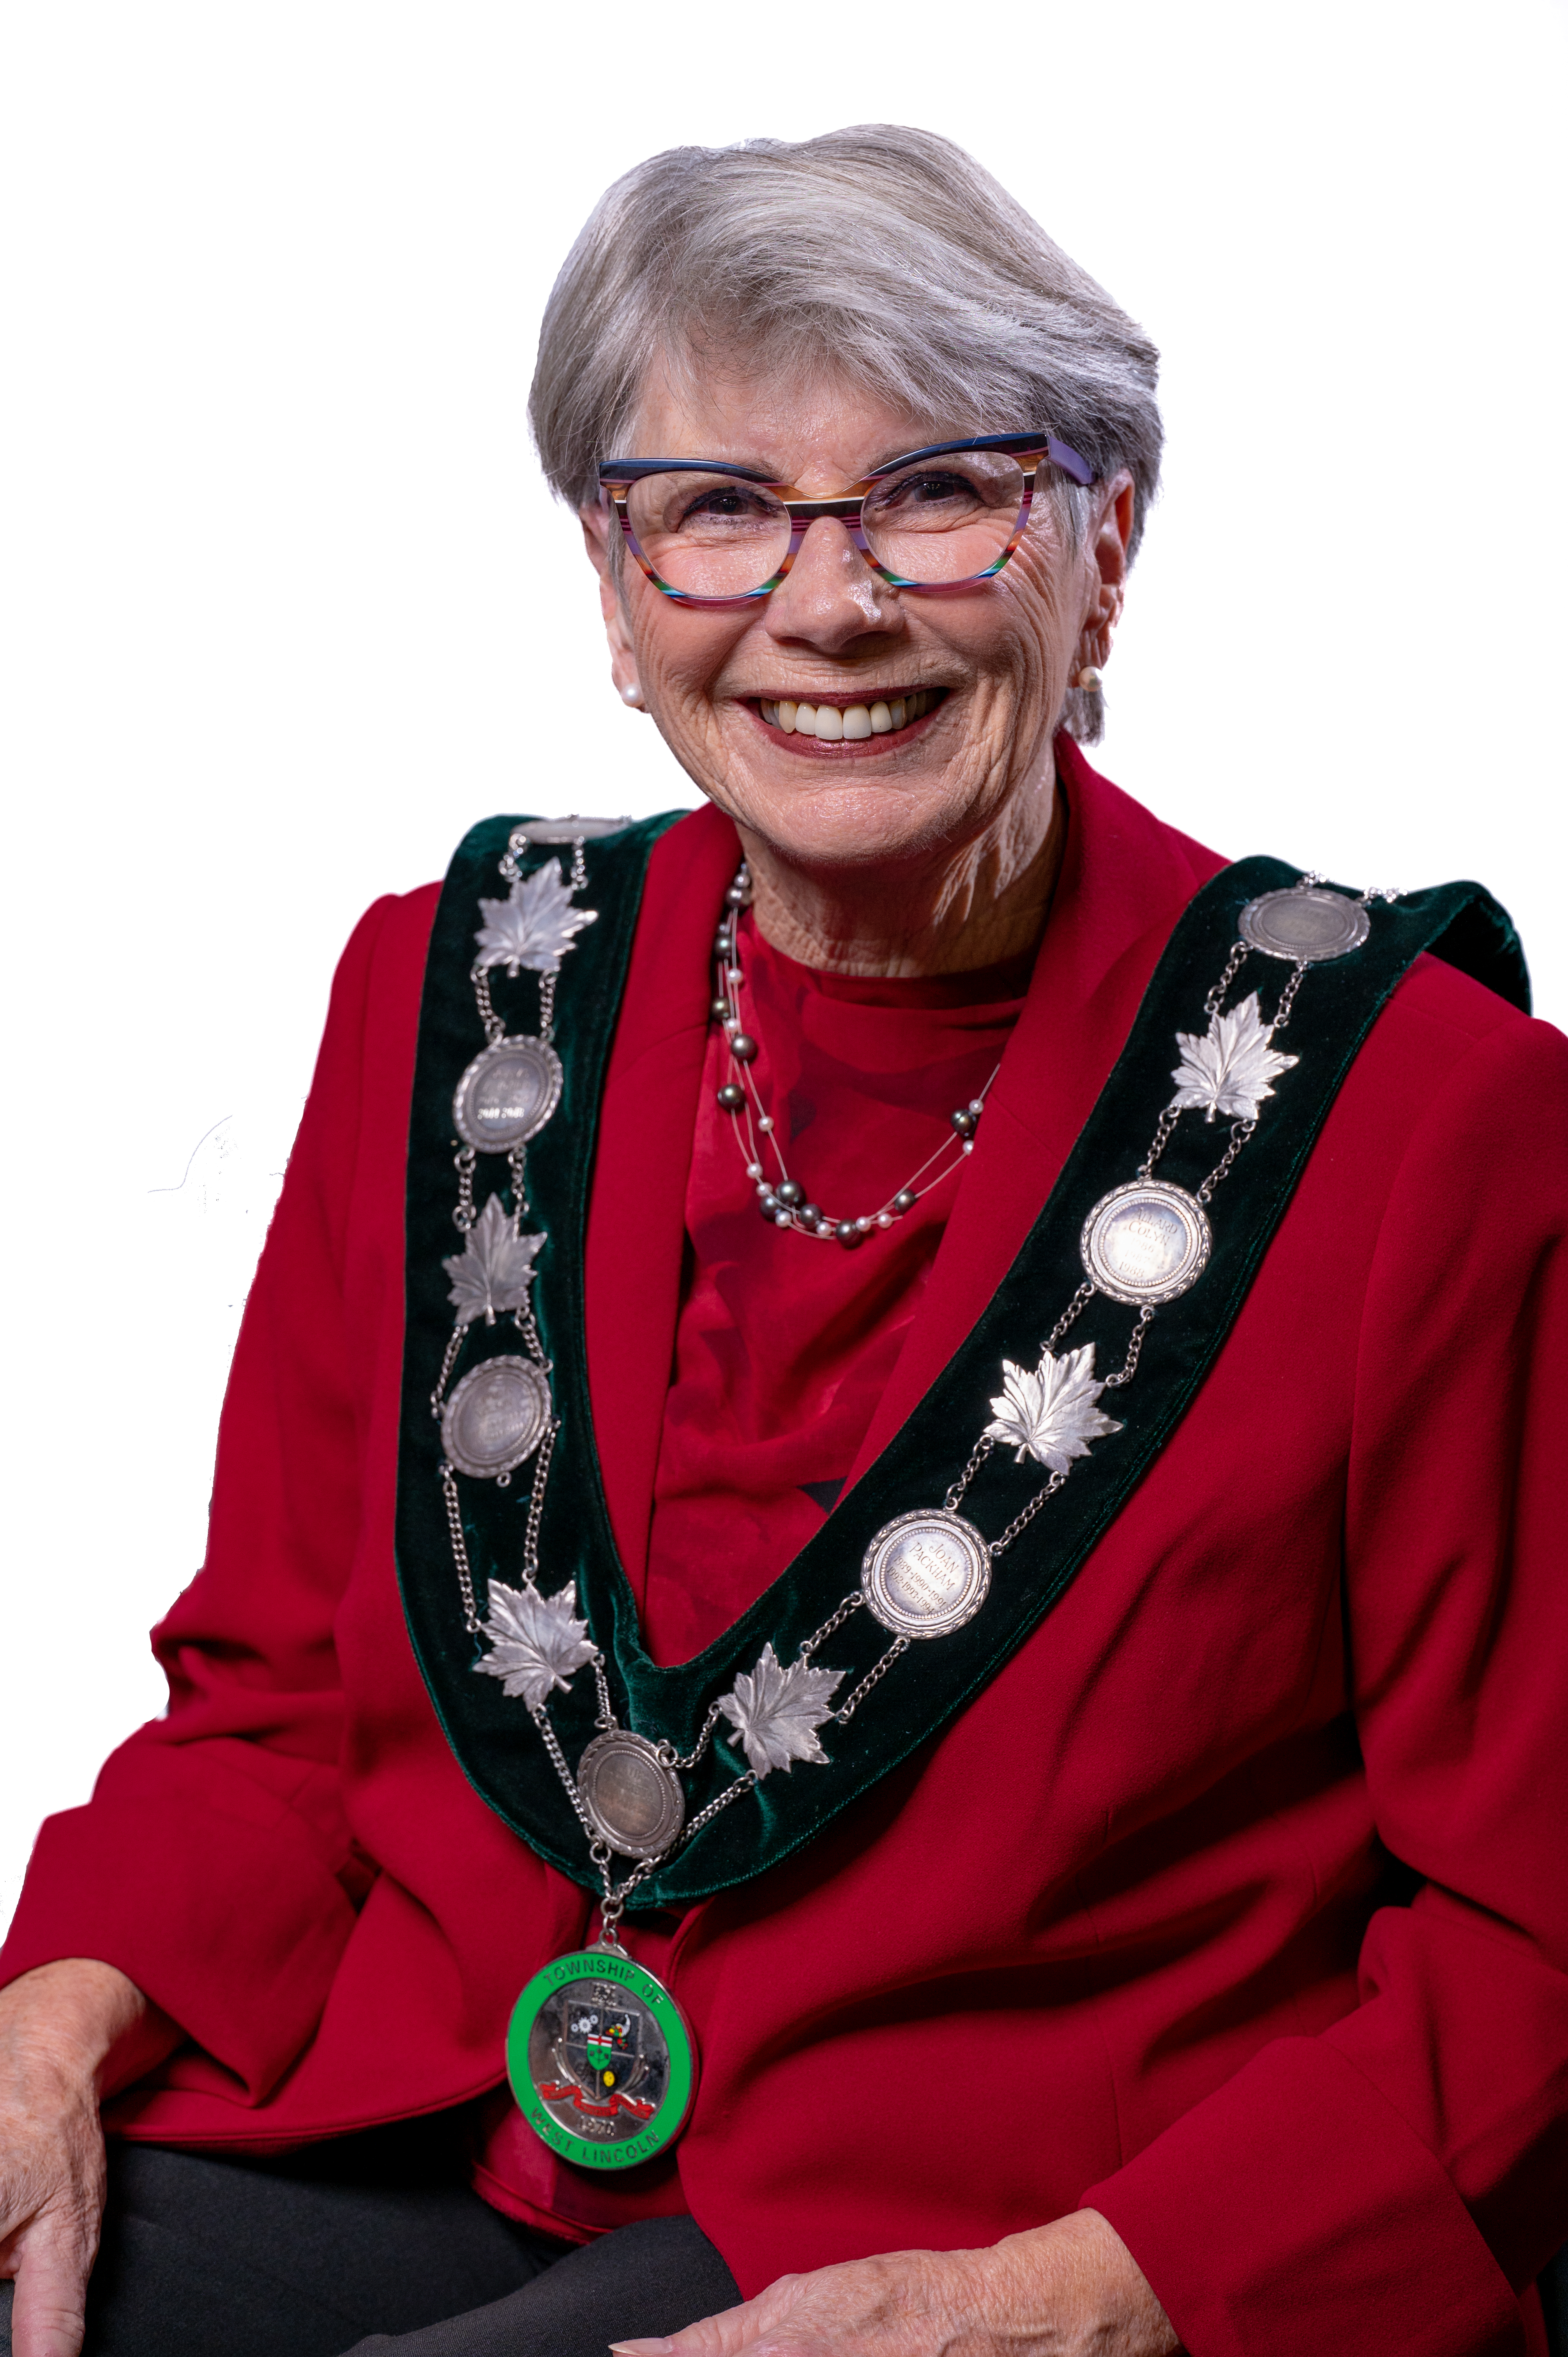 Mayor Cheryl Ganann